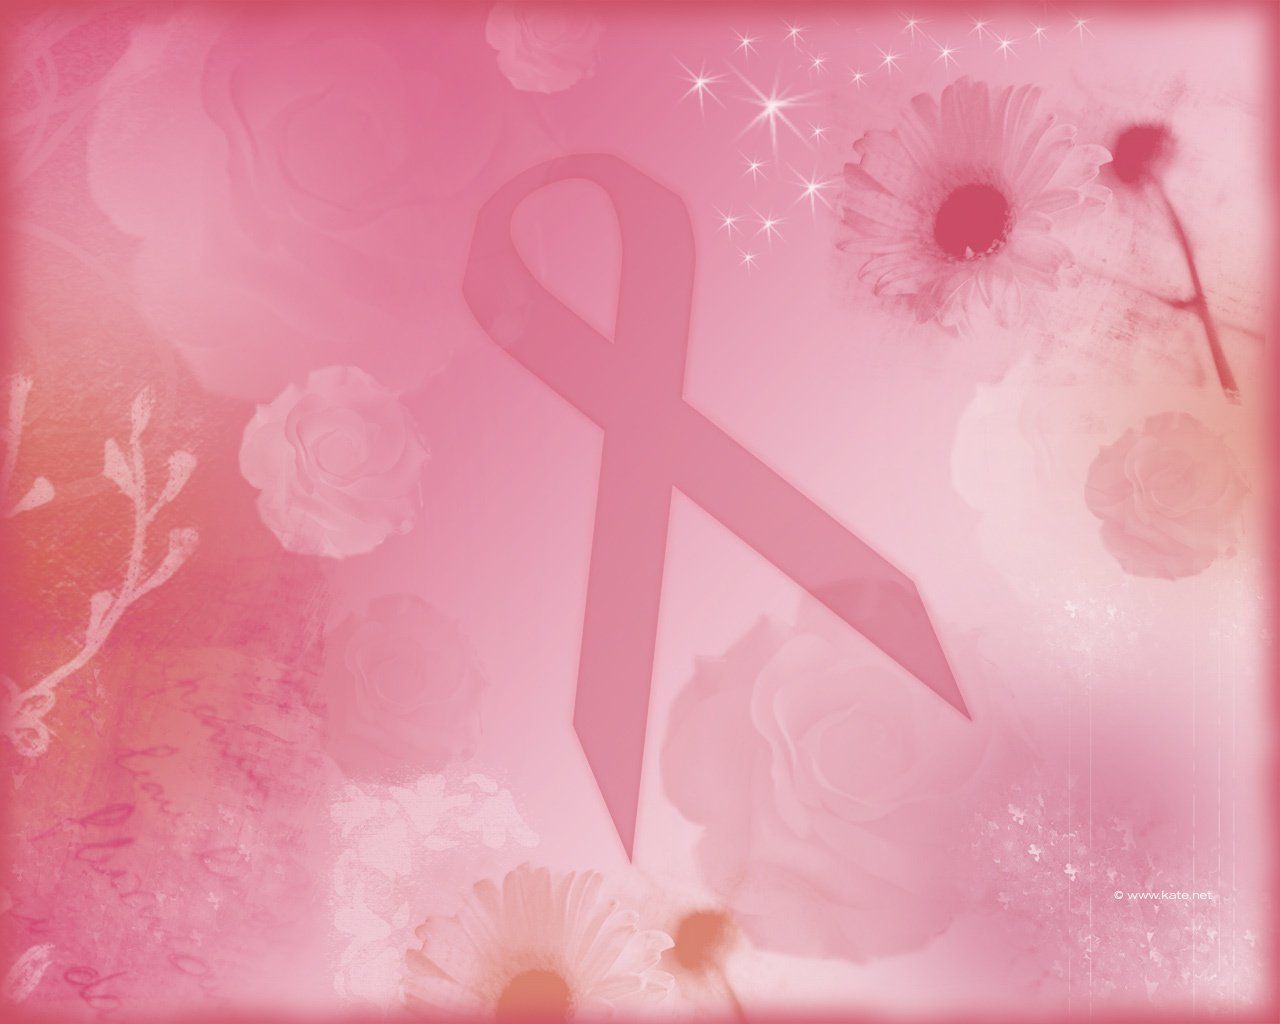 Breast Cancer Wallpaper for Facebook